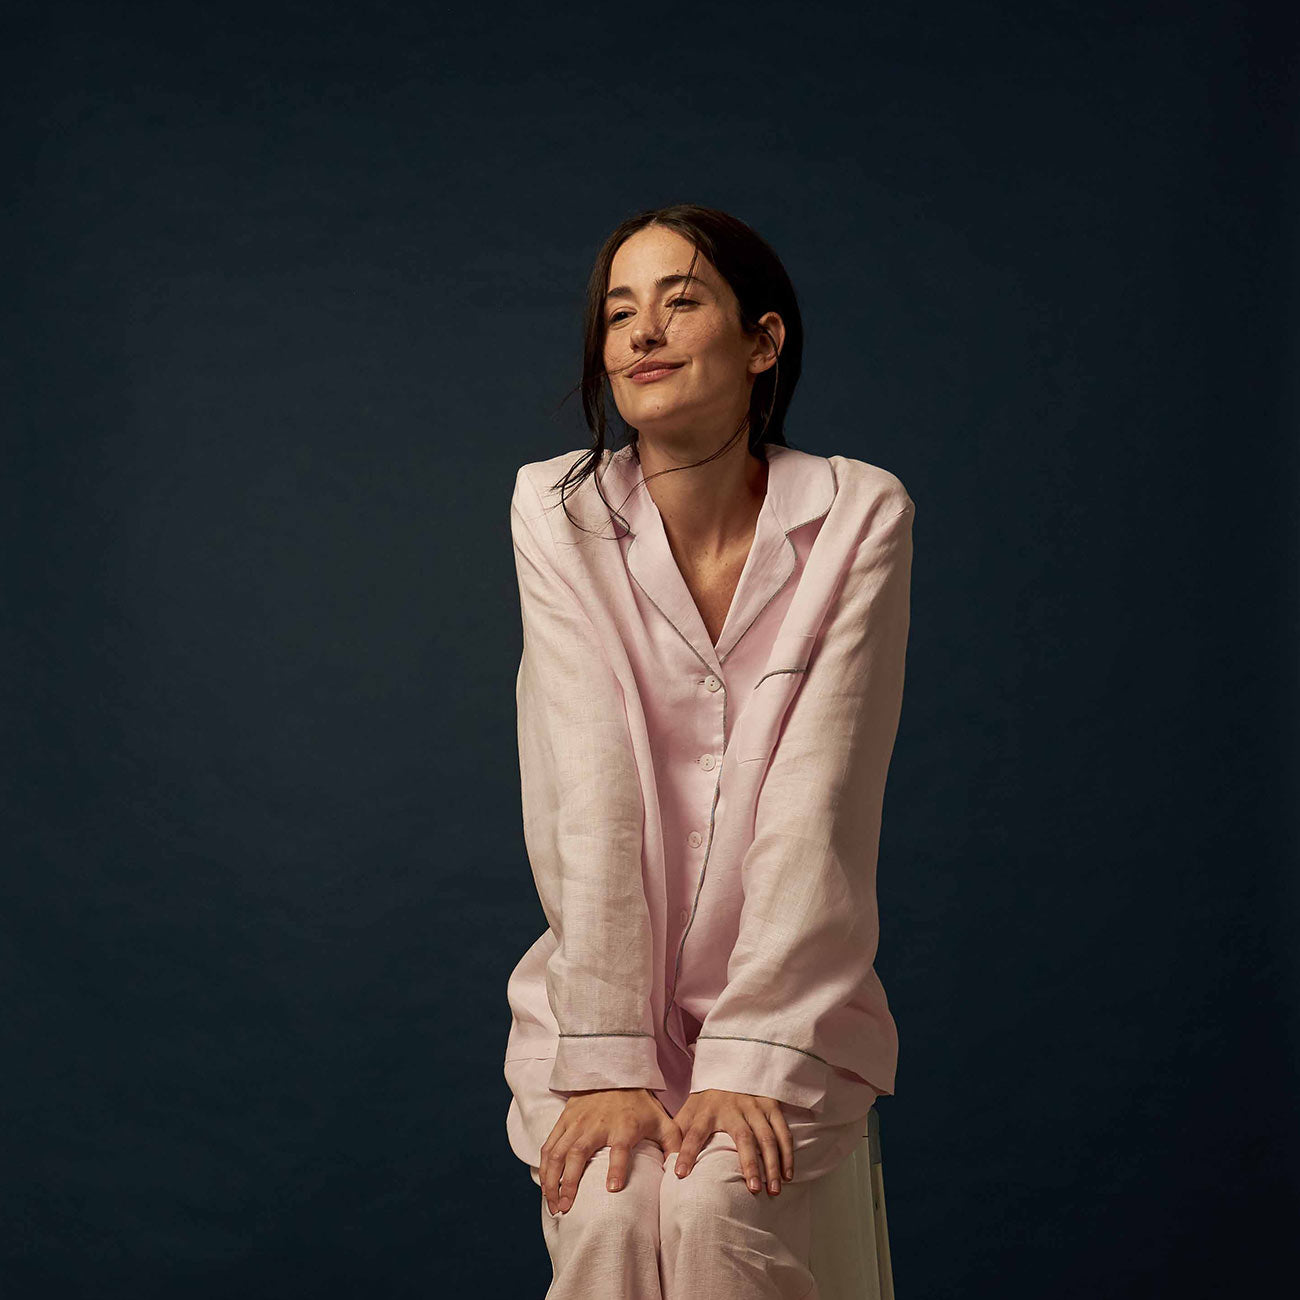 Women's Blush Pink Linen Pyjama Trouser Set